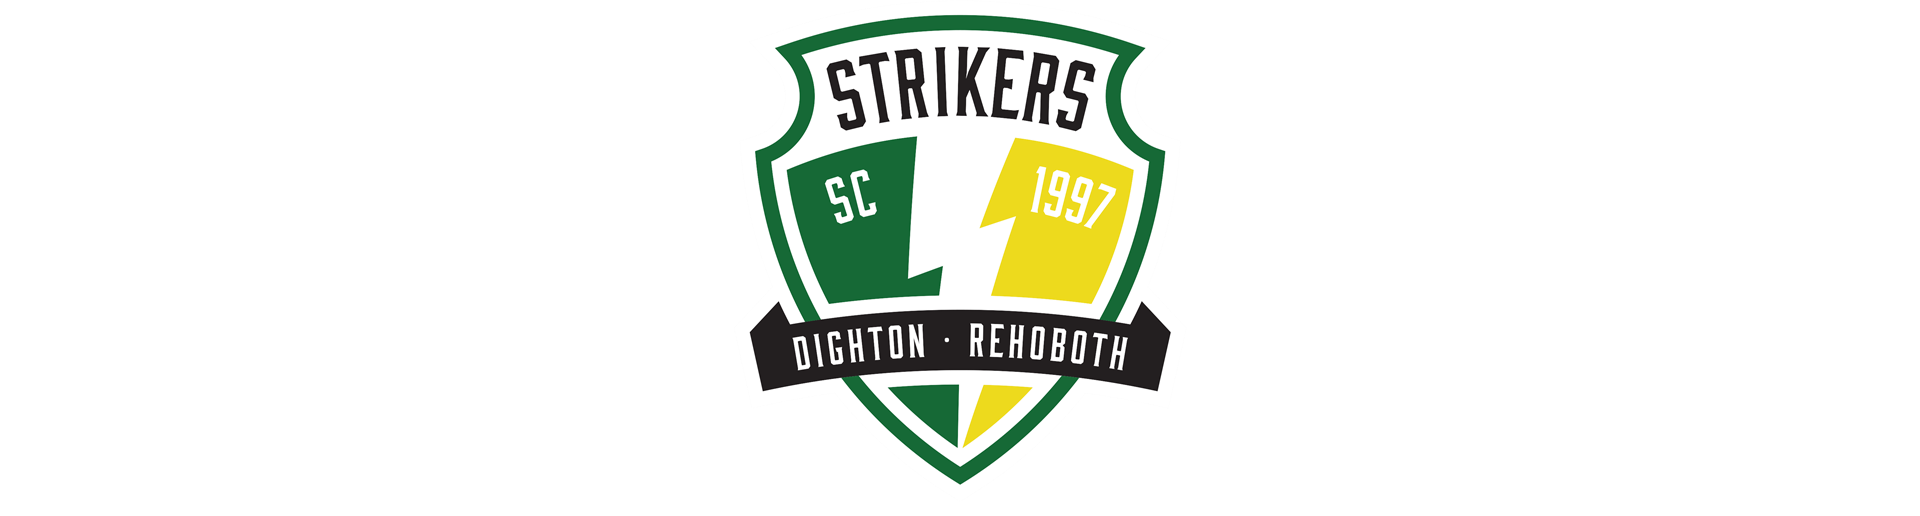 Dighton Rehoboth Soccer Club